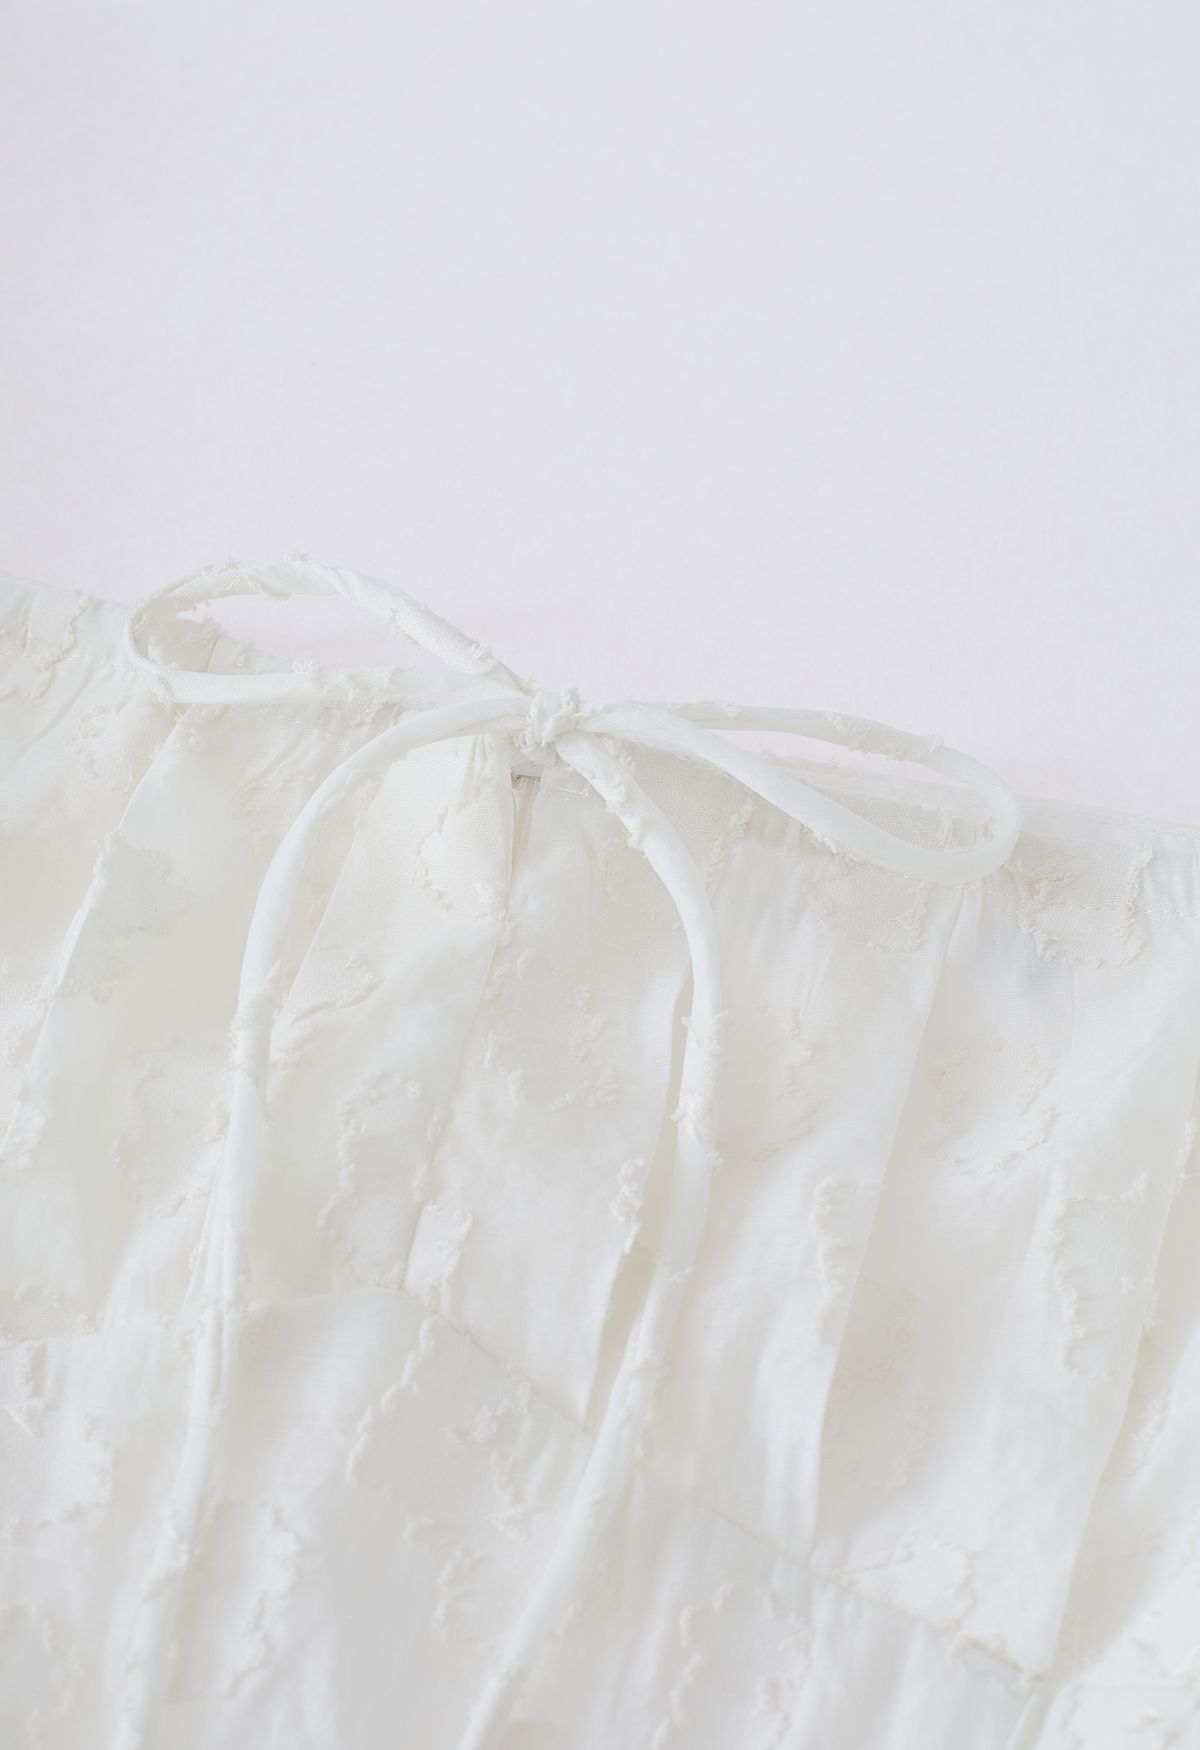 Square Neck Cloud Jacquard Midi Dress in White